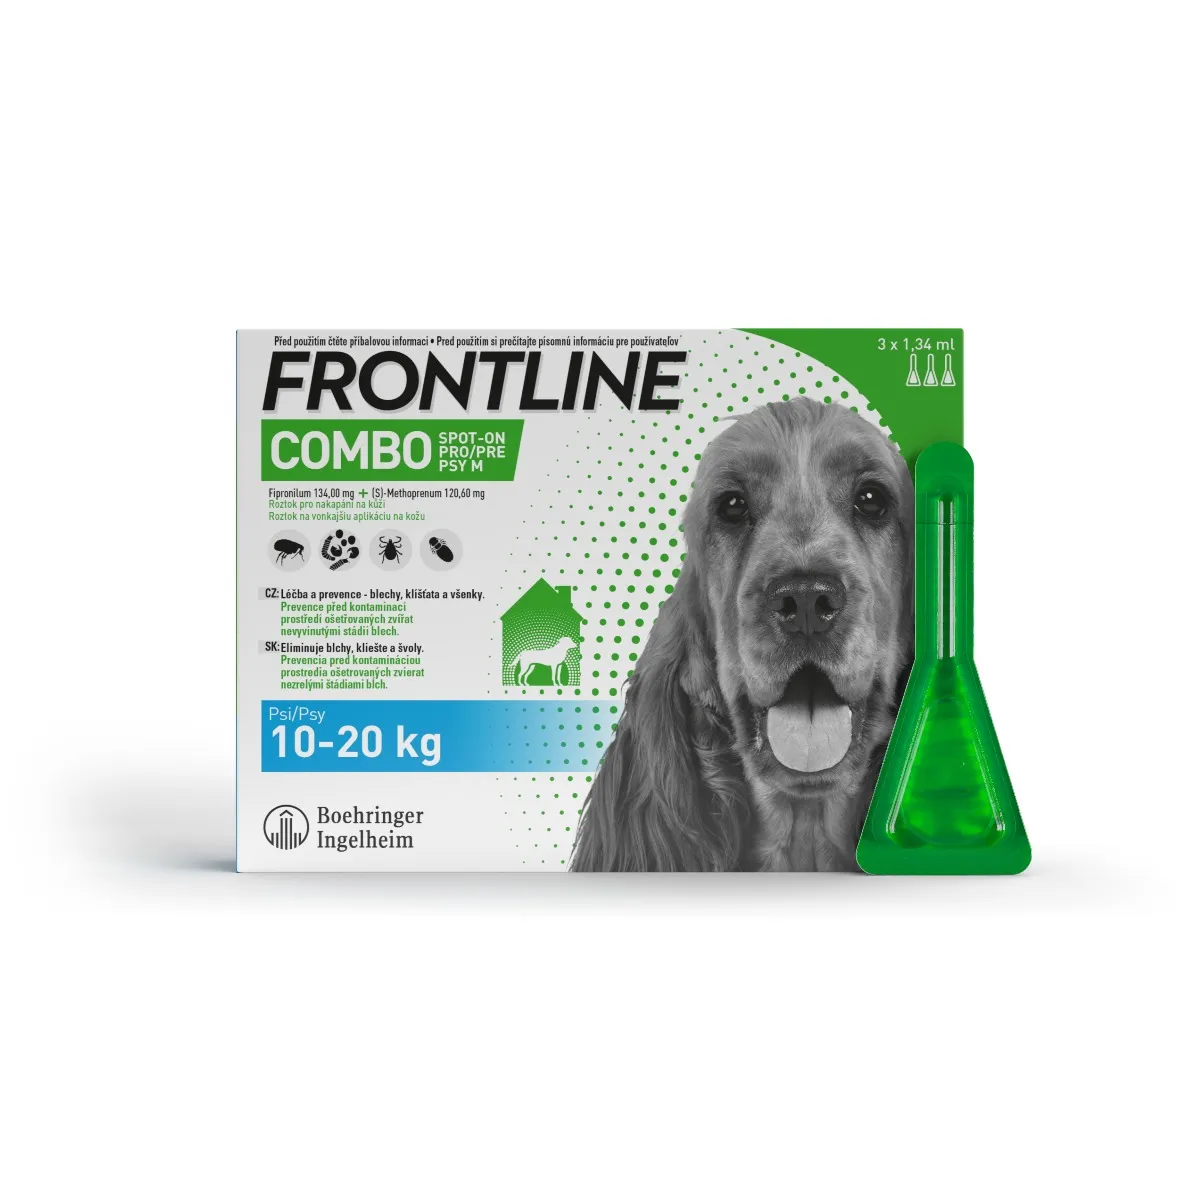 FRONTLINE COMBO spot-on pro DOG M  3 x 1,34 ml